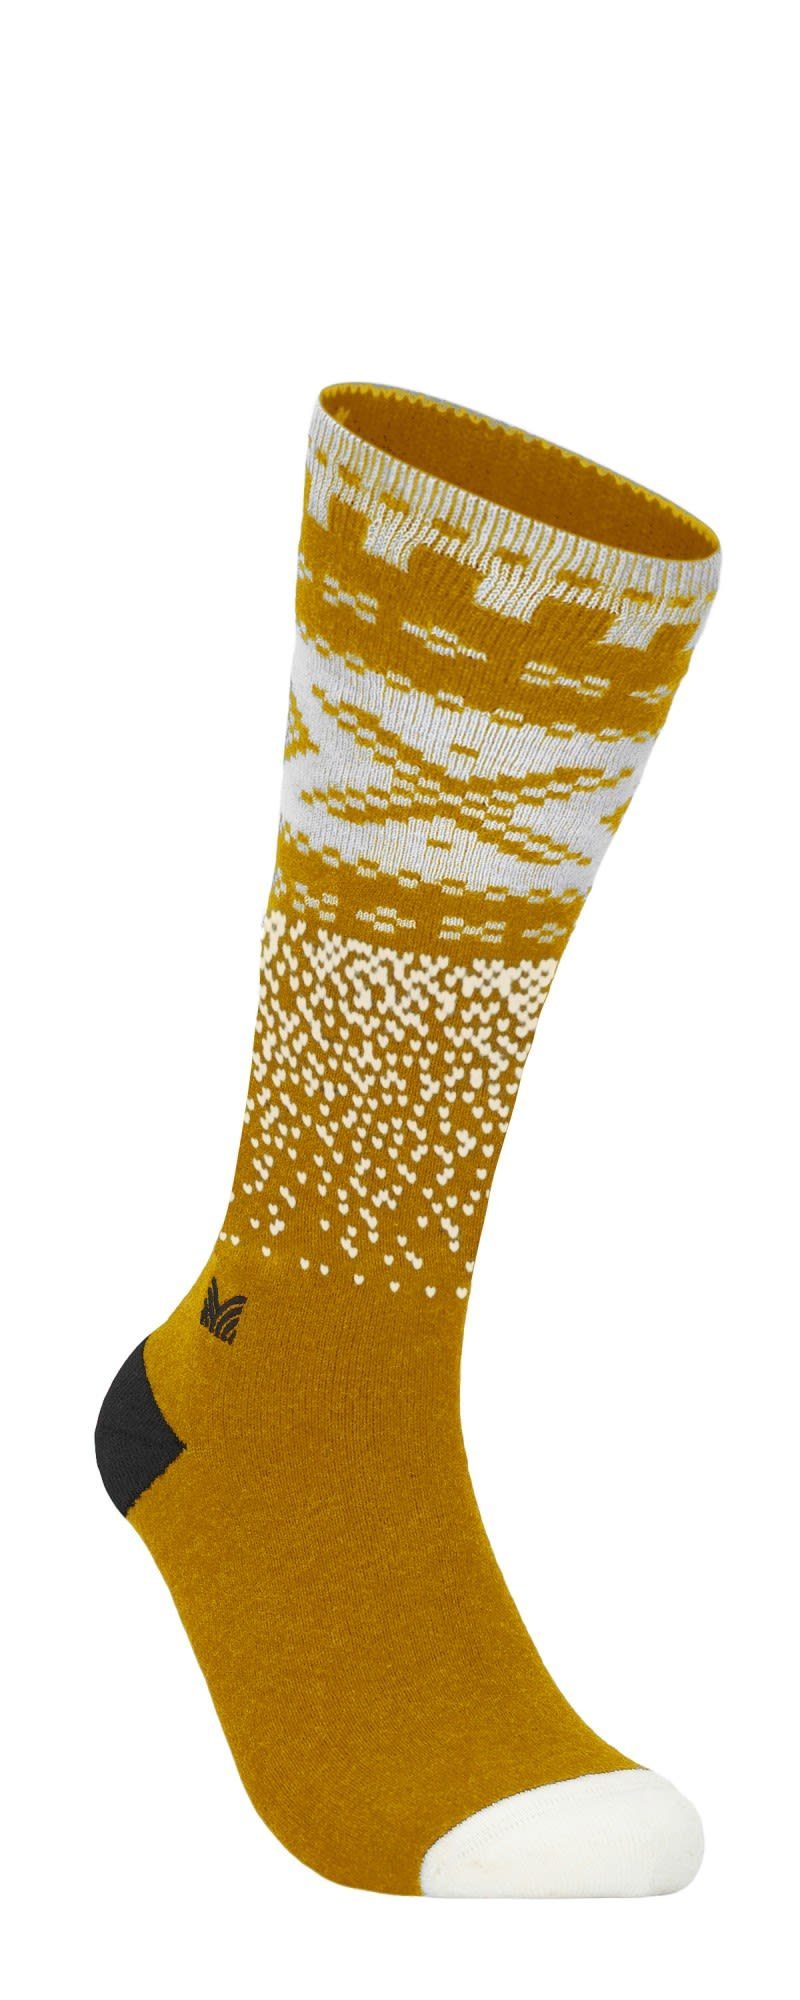 Dale Dark Dale Thermosocken Offwhite Norway - Mustard Socks Of Norway High Cortina of Grey -